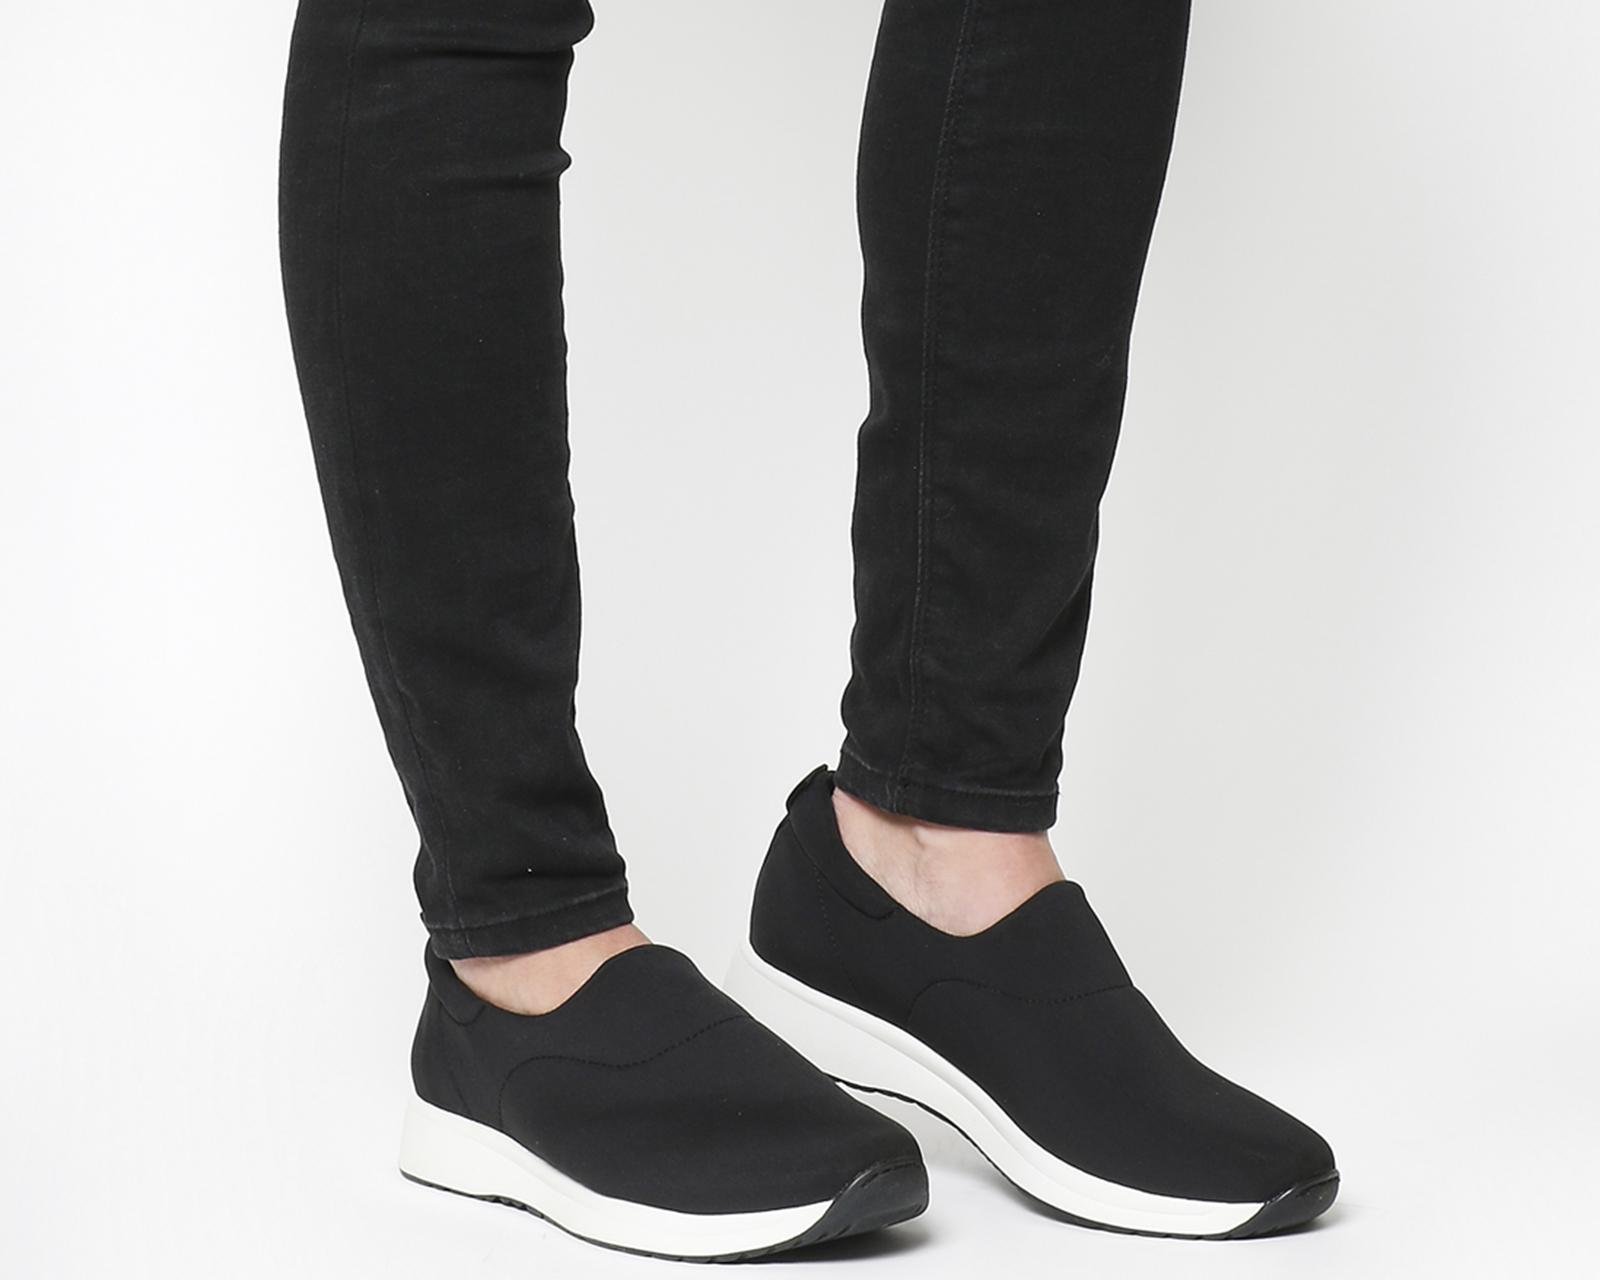 Lyst - Vagabond Cintia Stretch Sneakers in Black